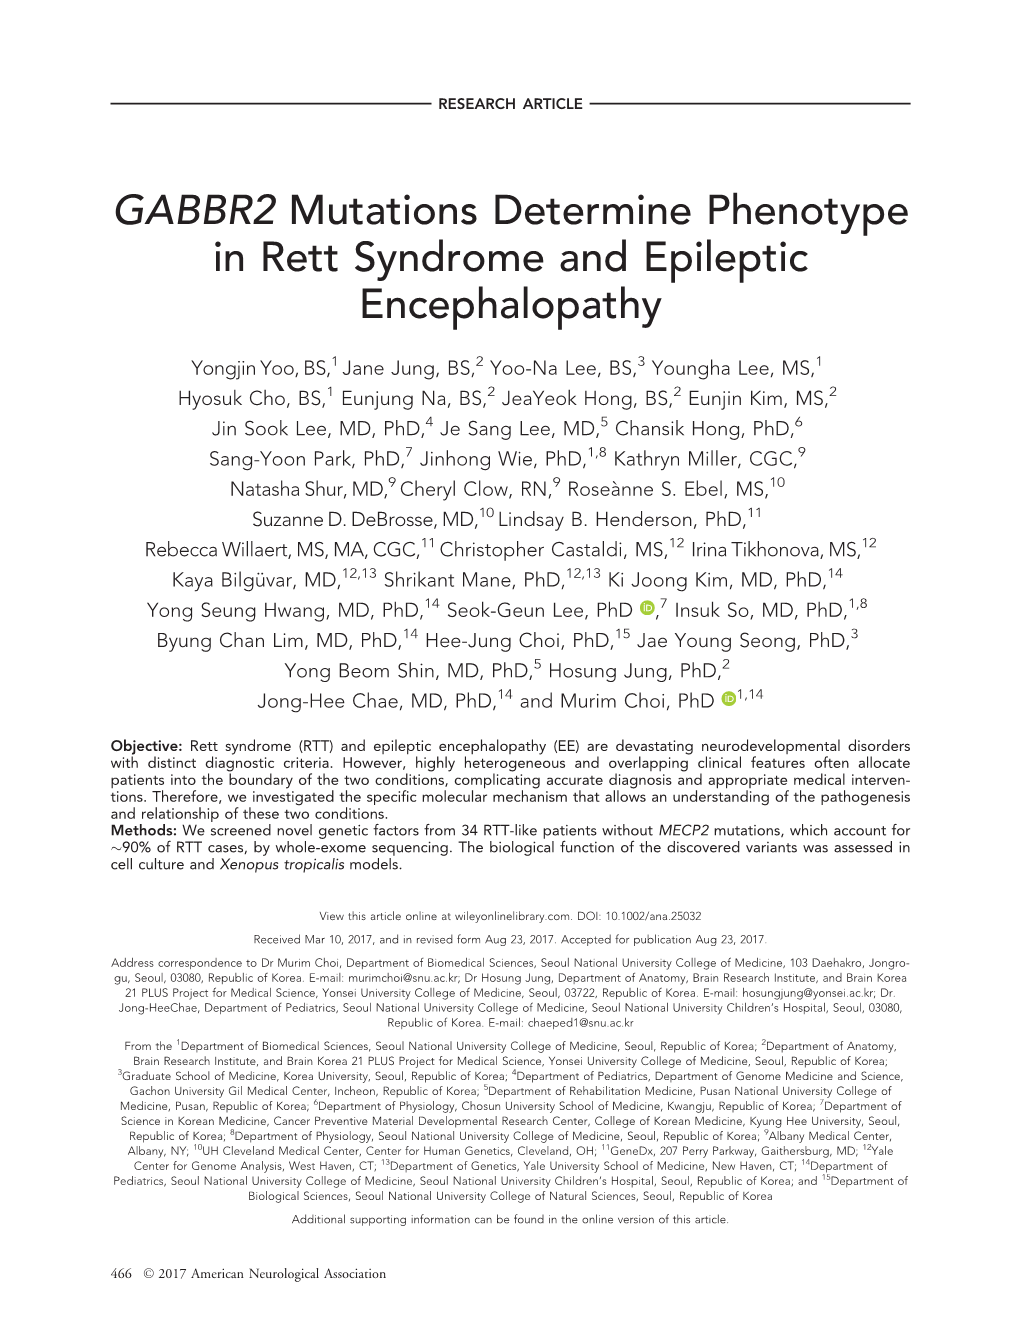 GABBR2 Mutations Determine Phenotype in Rett Syndrome and Epileptic Encephalopathy